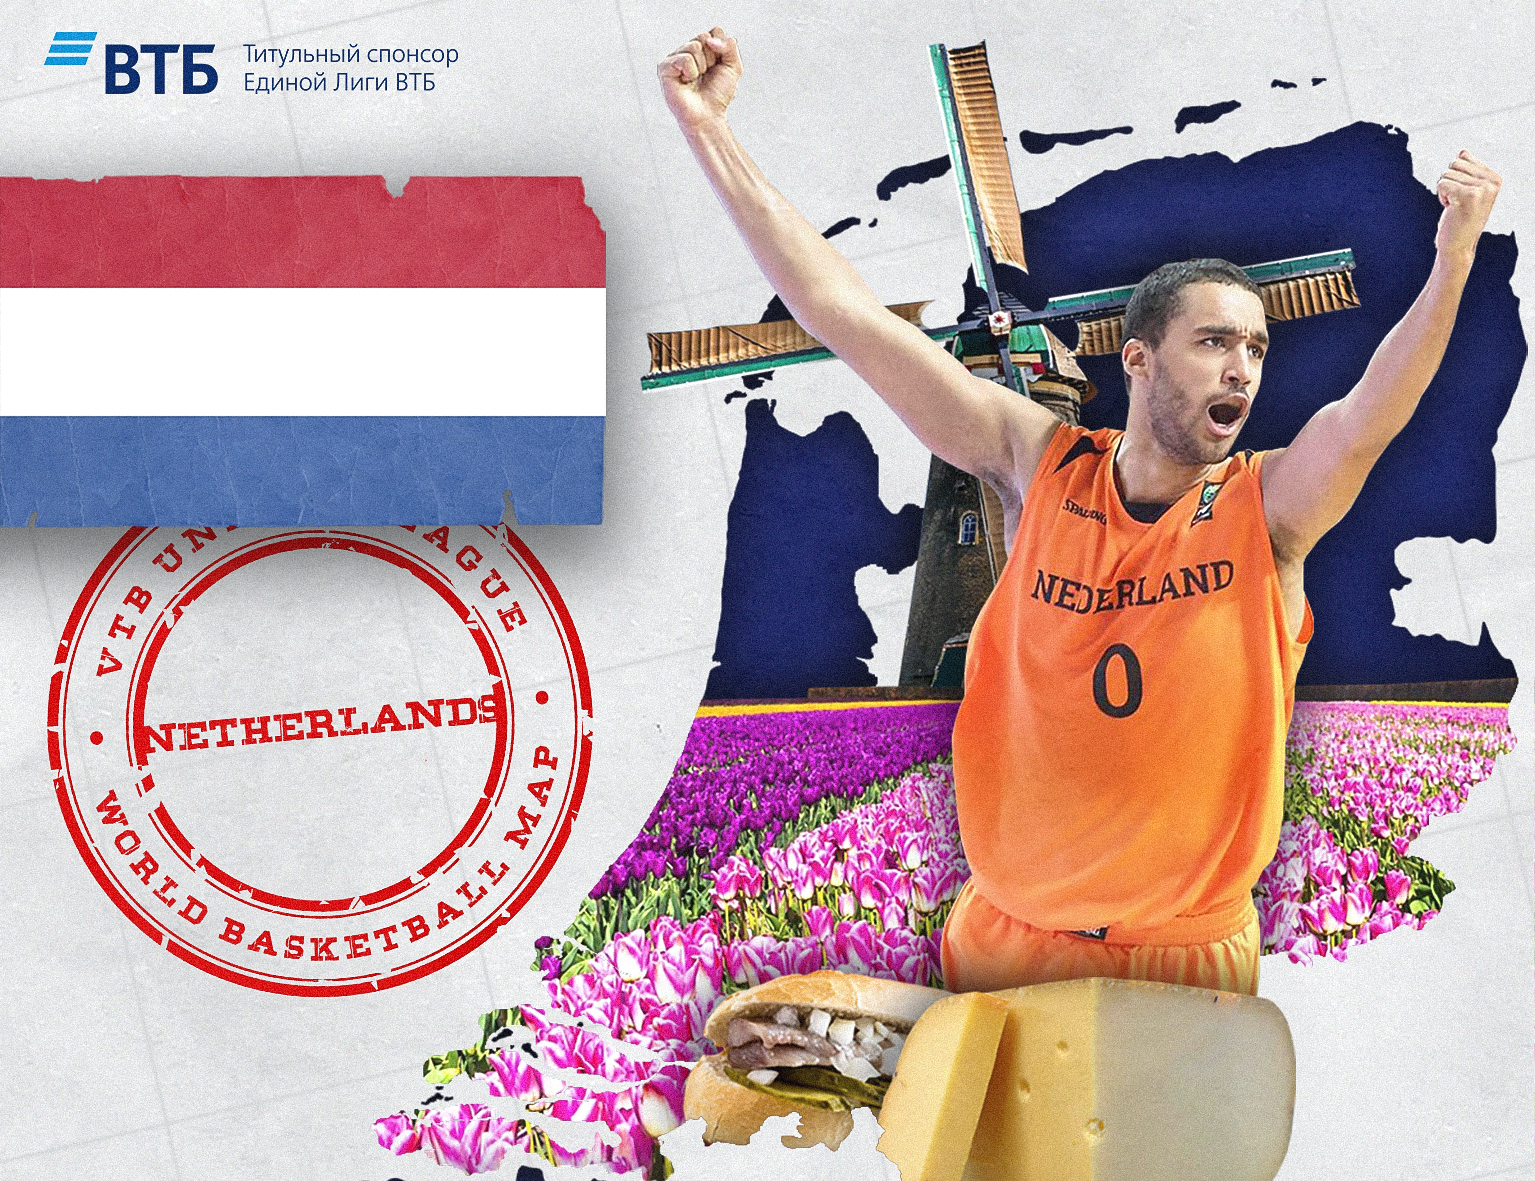 World basketball map: The Netherlands